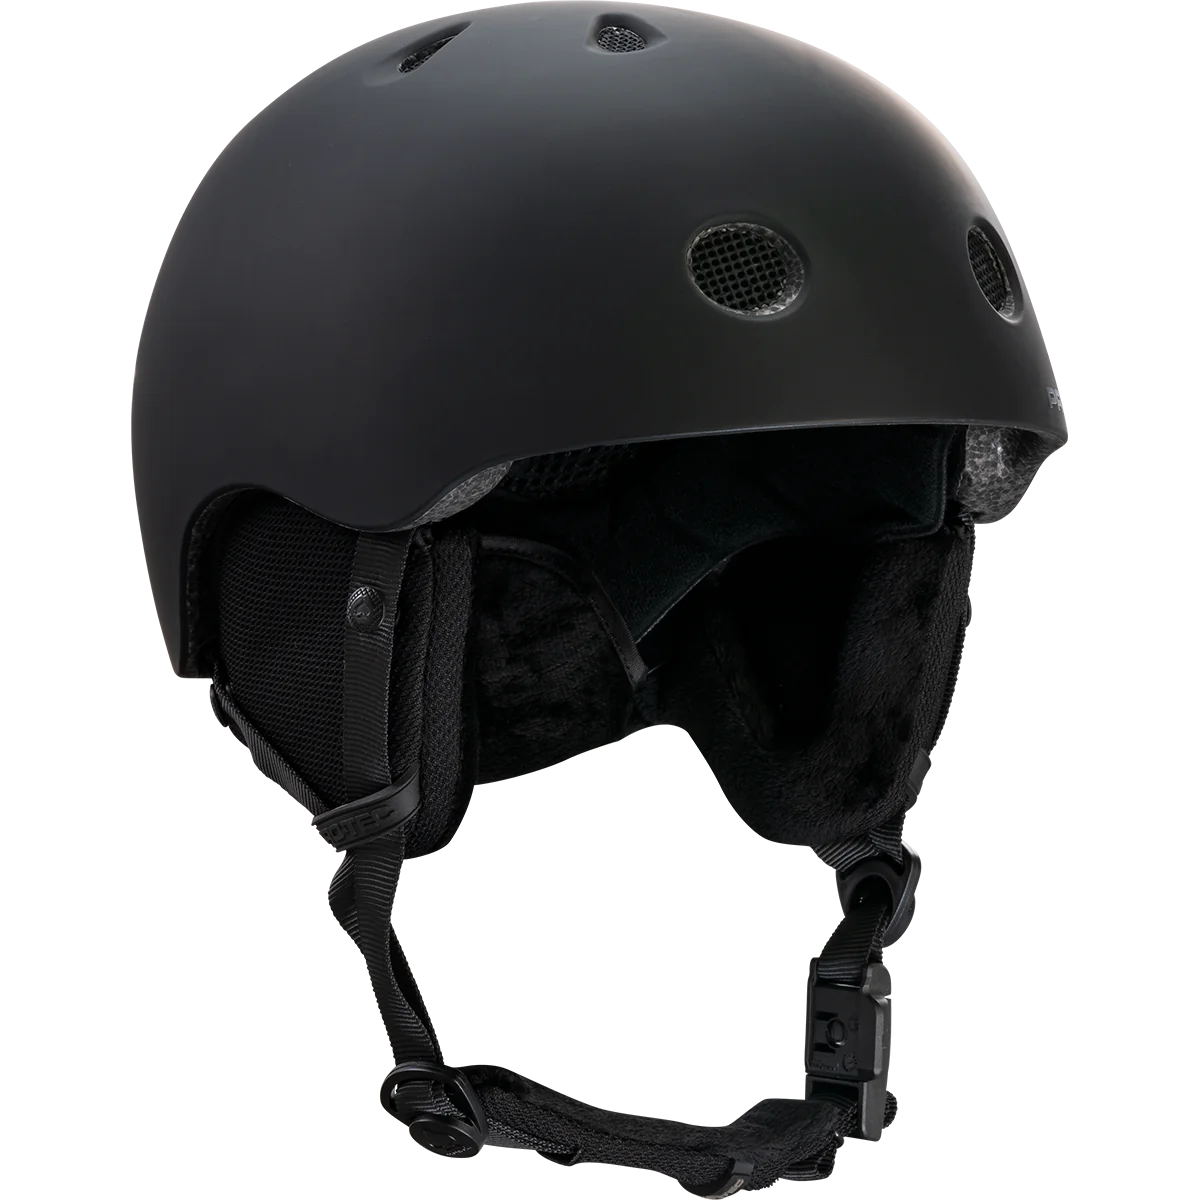 Pro-tec classic lite helm stealth black